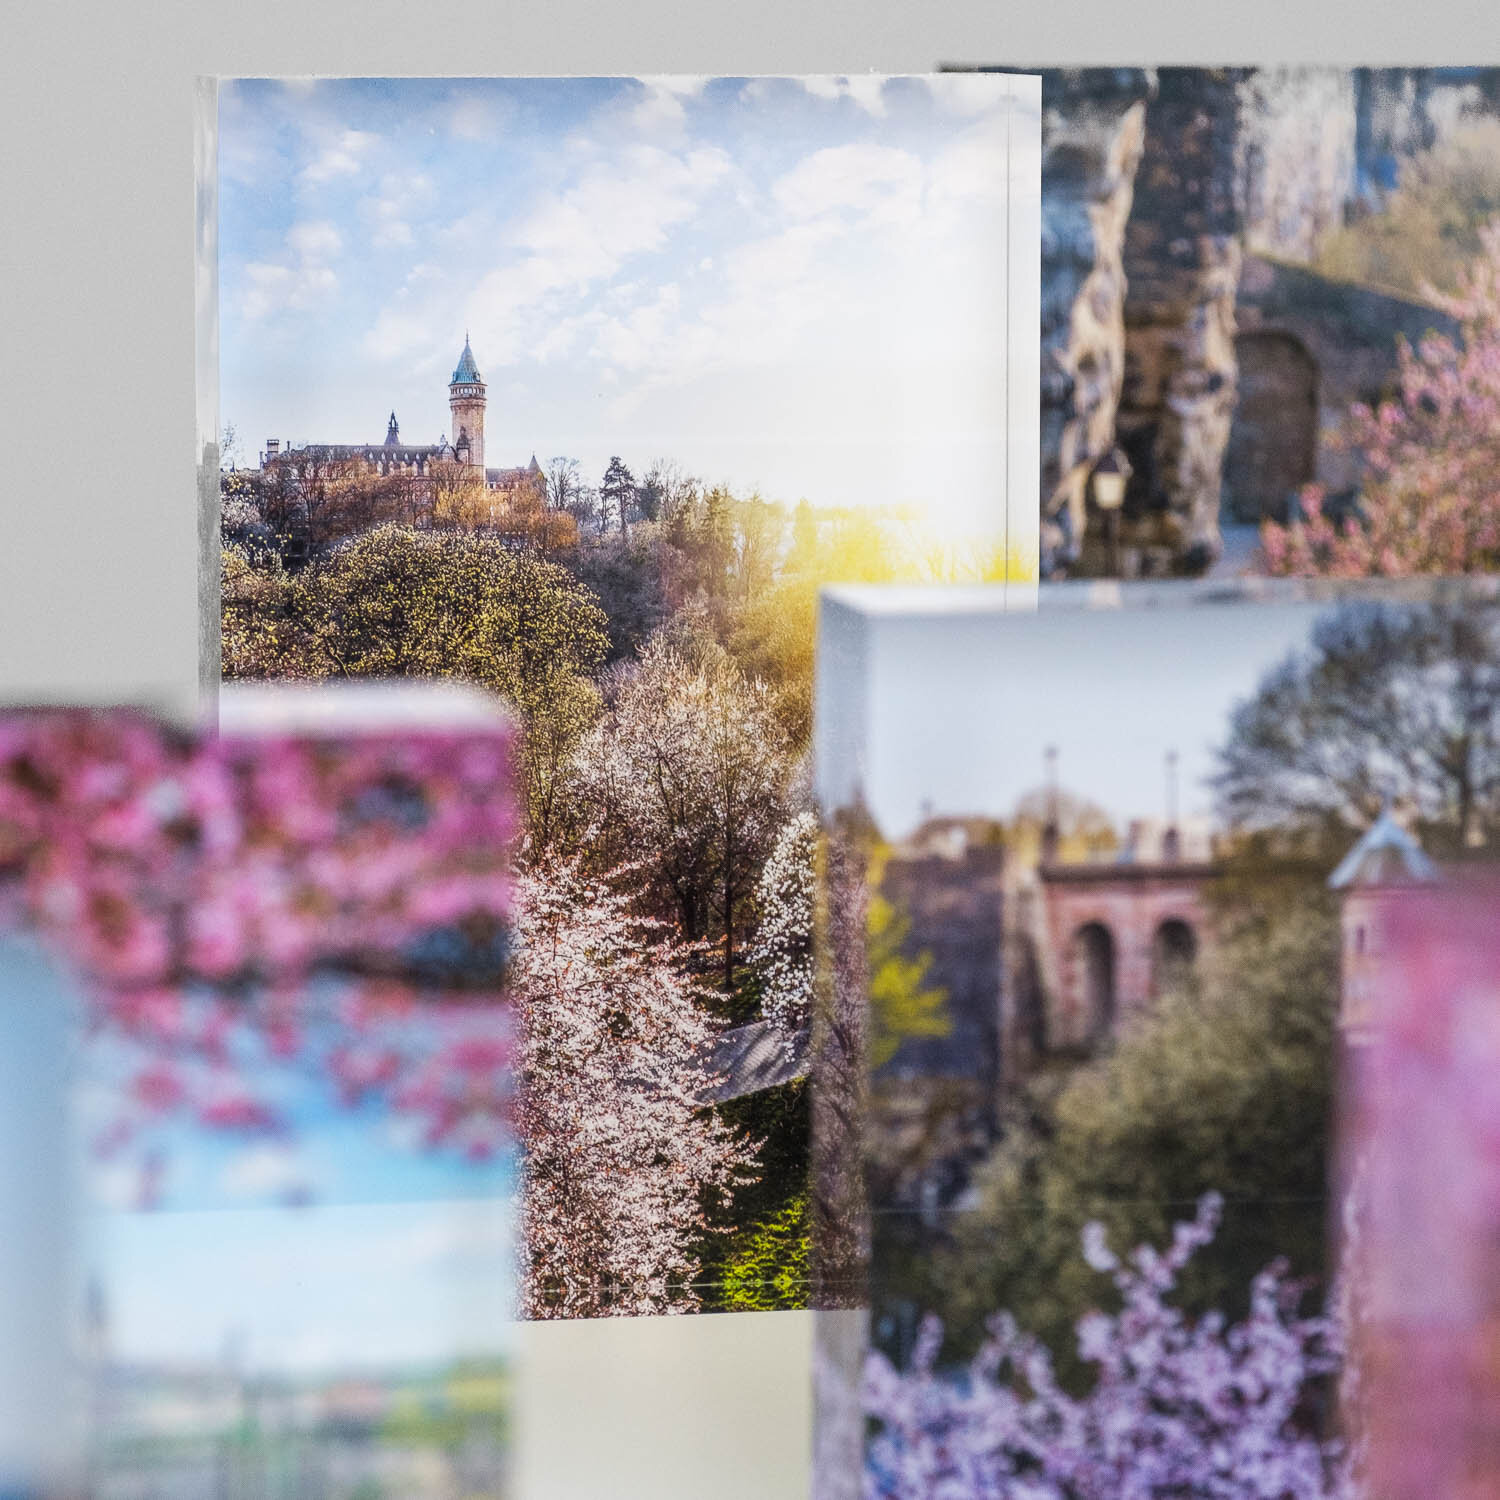 Sakura - Luxembourg Cherry Blossoms - Spring in Luxembourg - Art for sale - Blog Blogger Journal - Christophe Van Biesen - Artist Photographer